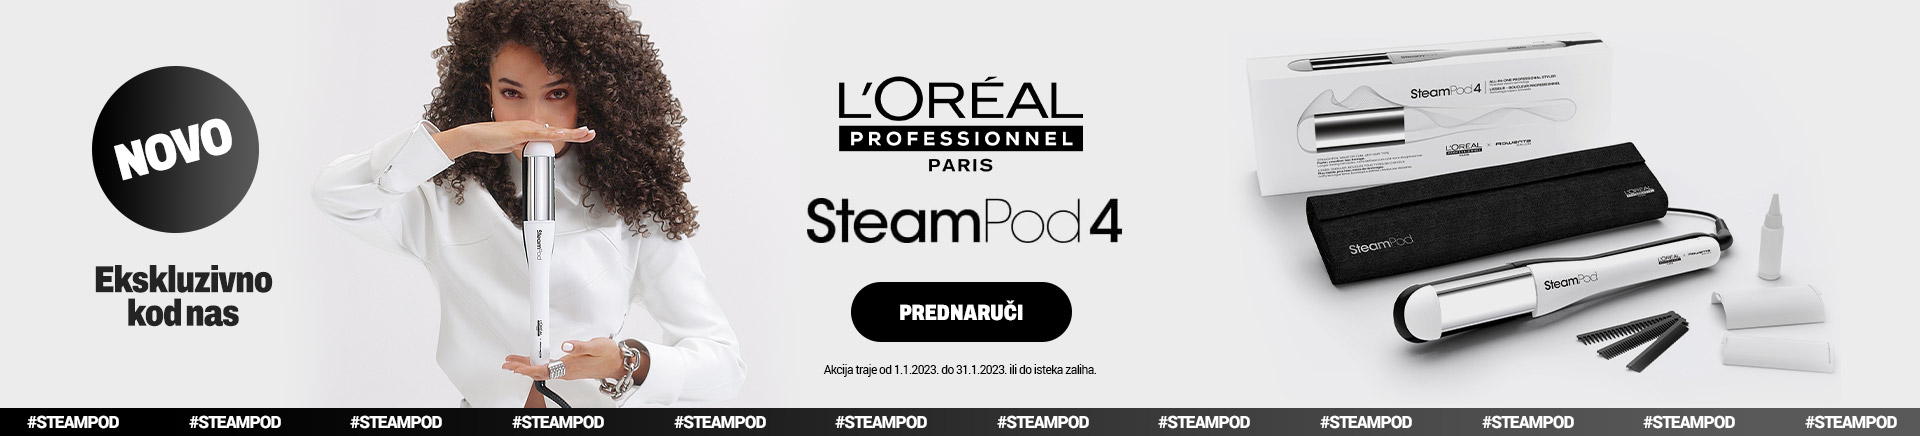 HR Loreal SteamPod 4 MOBILE 380 X 436.jpg